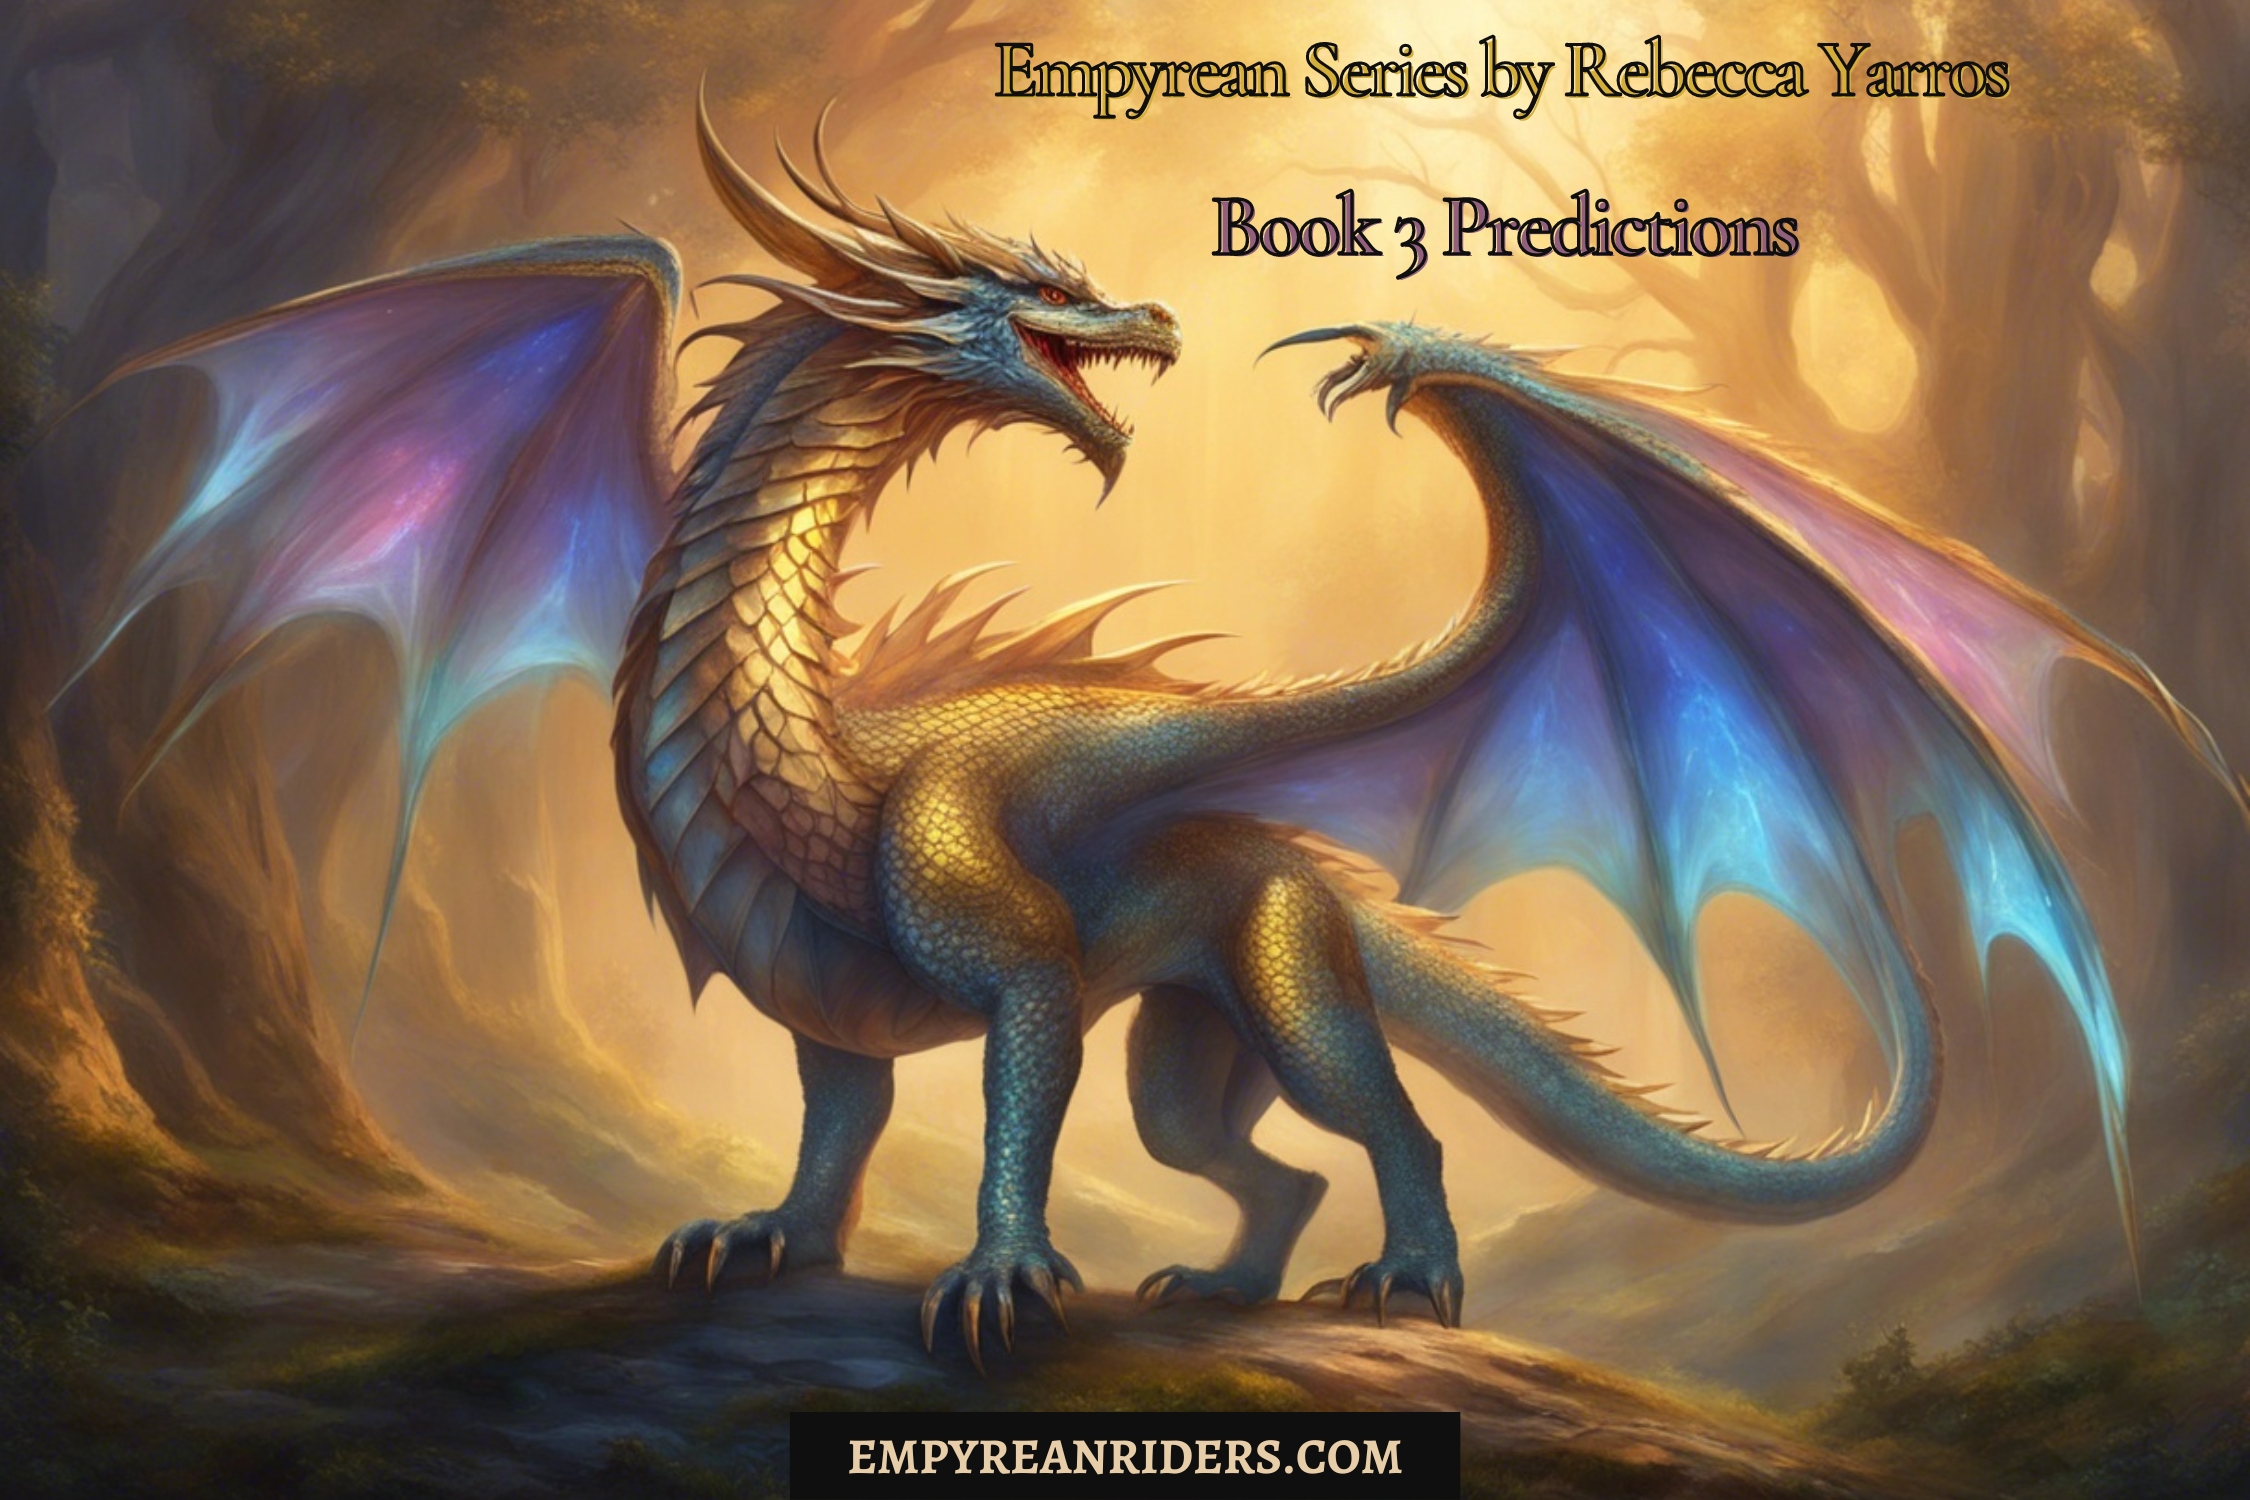 Predictions for Book 3 Empyrean Series